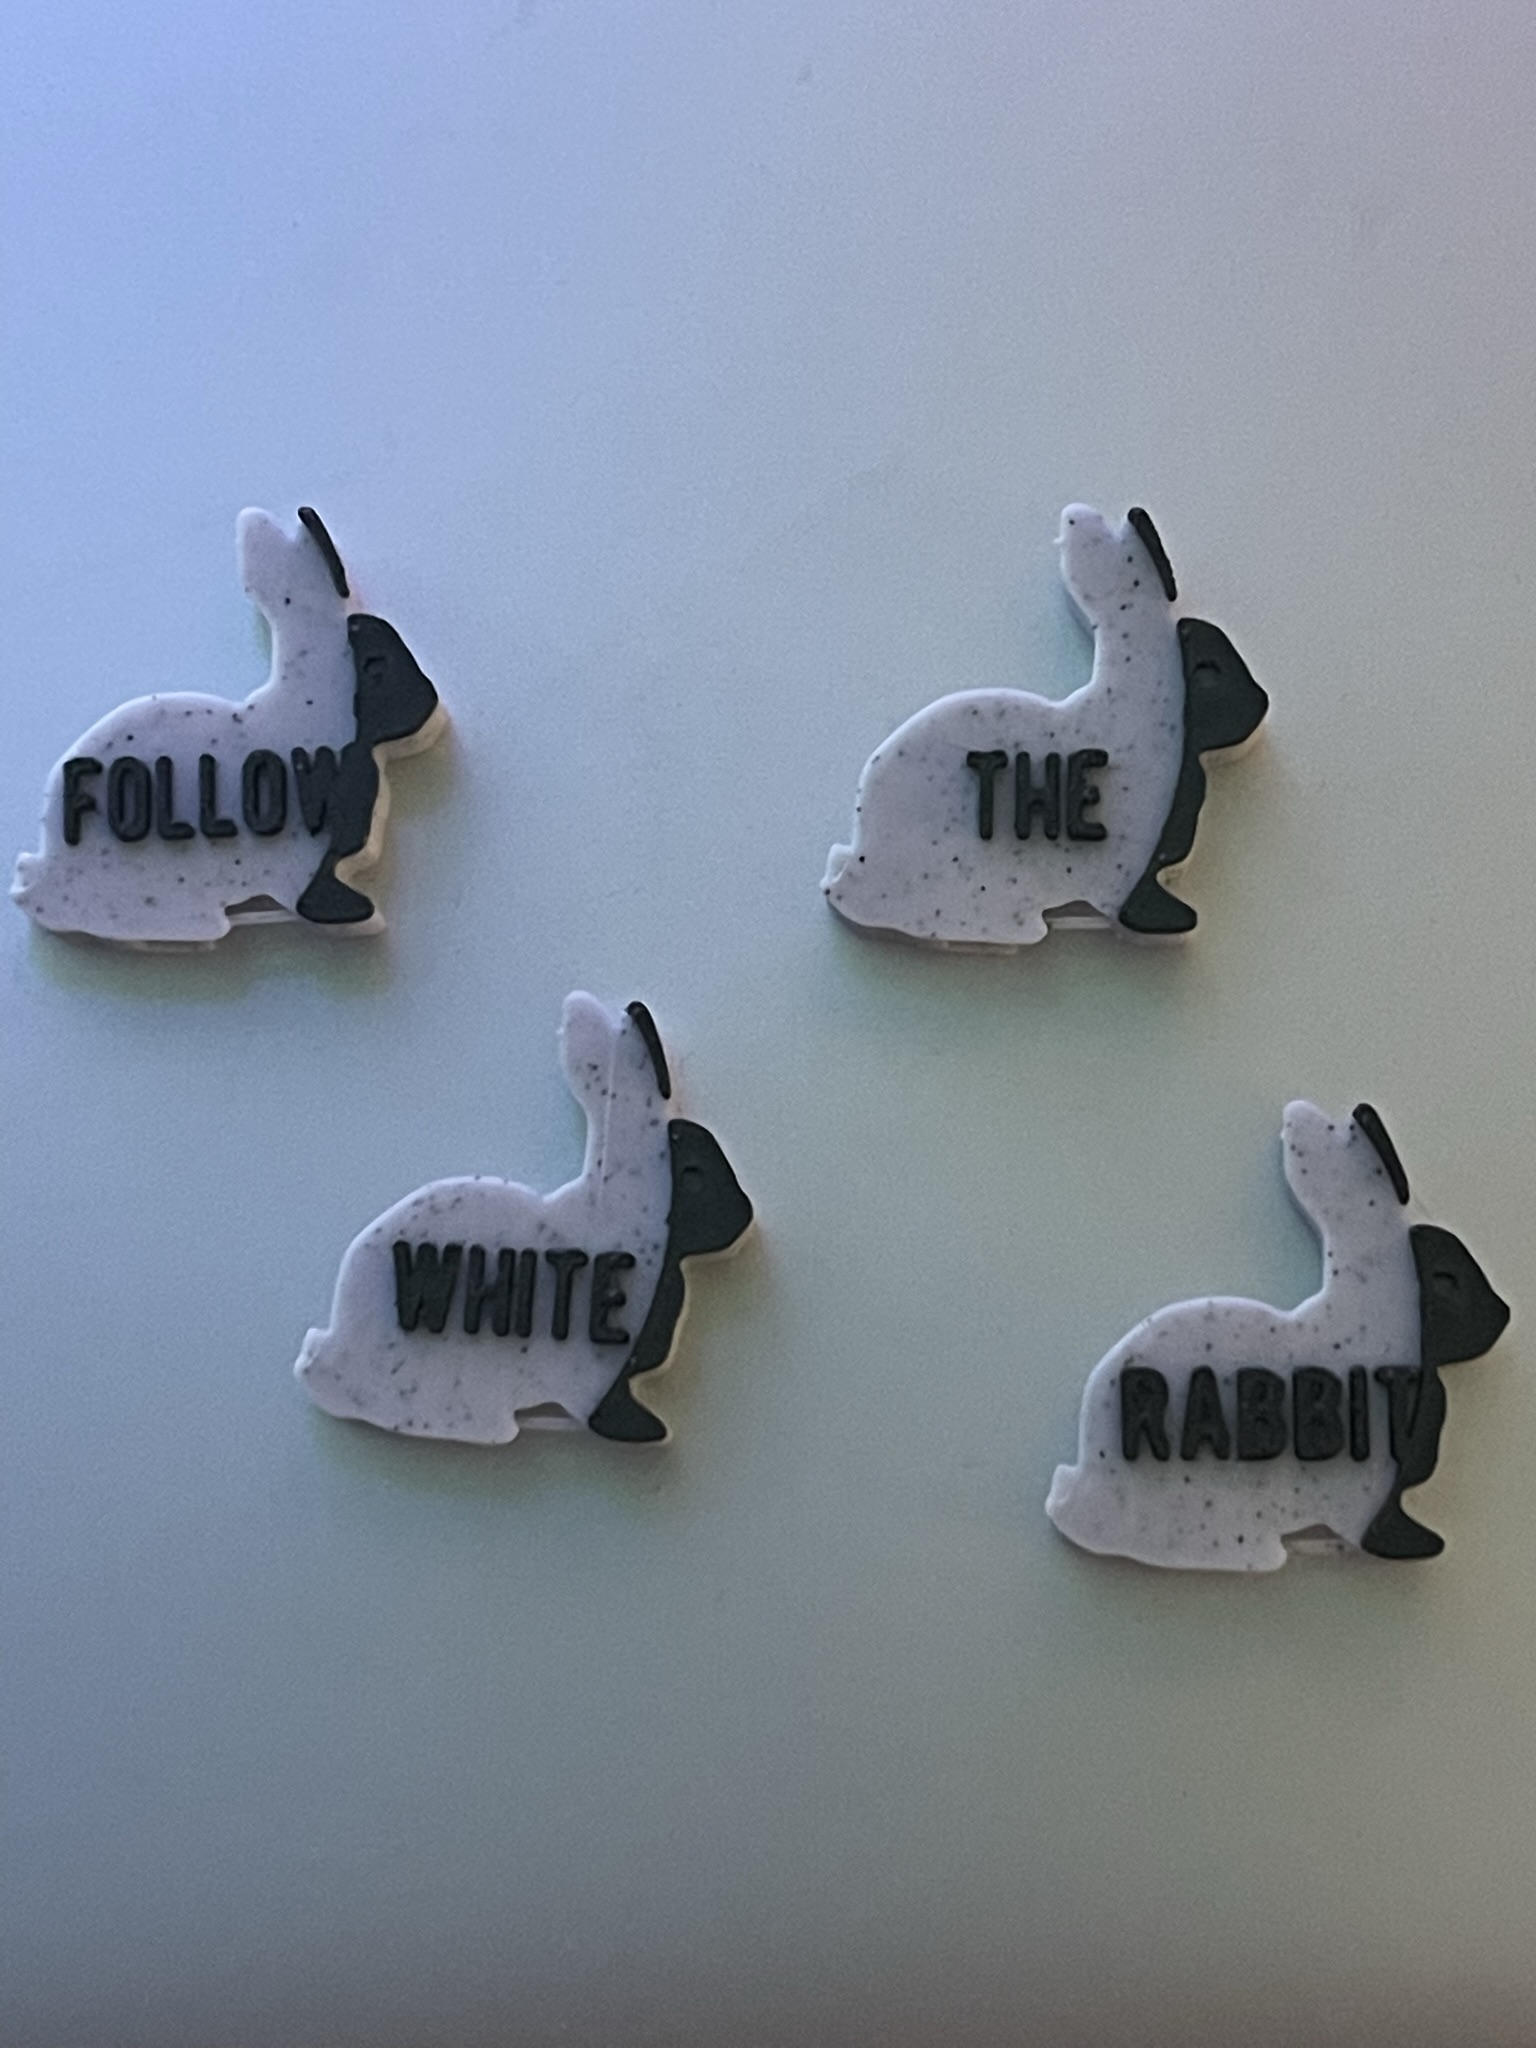 Follow the White Rabbit saucy button caps